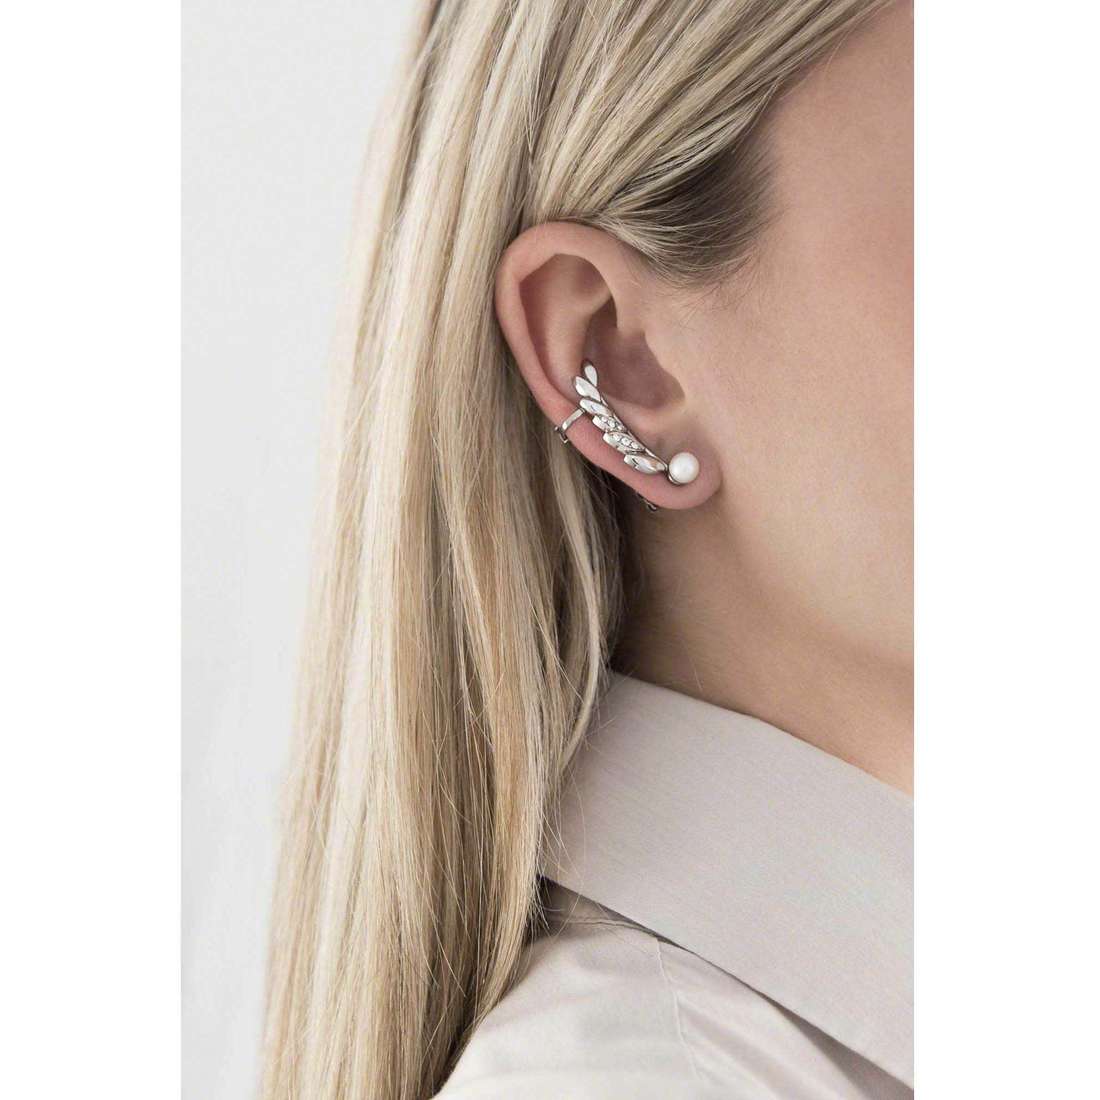 Morellato earrings Gioia woman SAER22 wearing